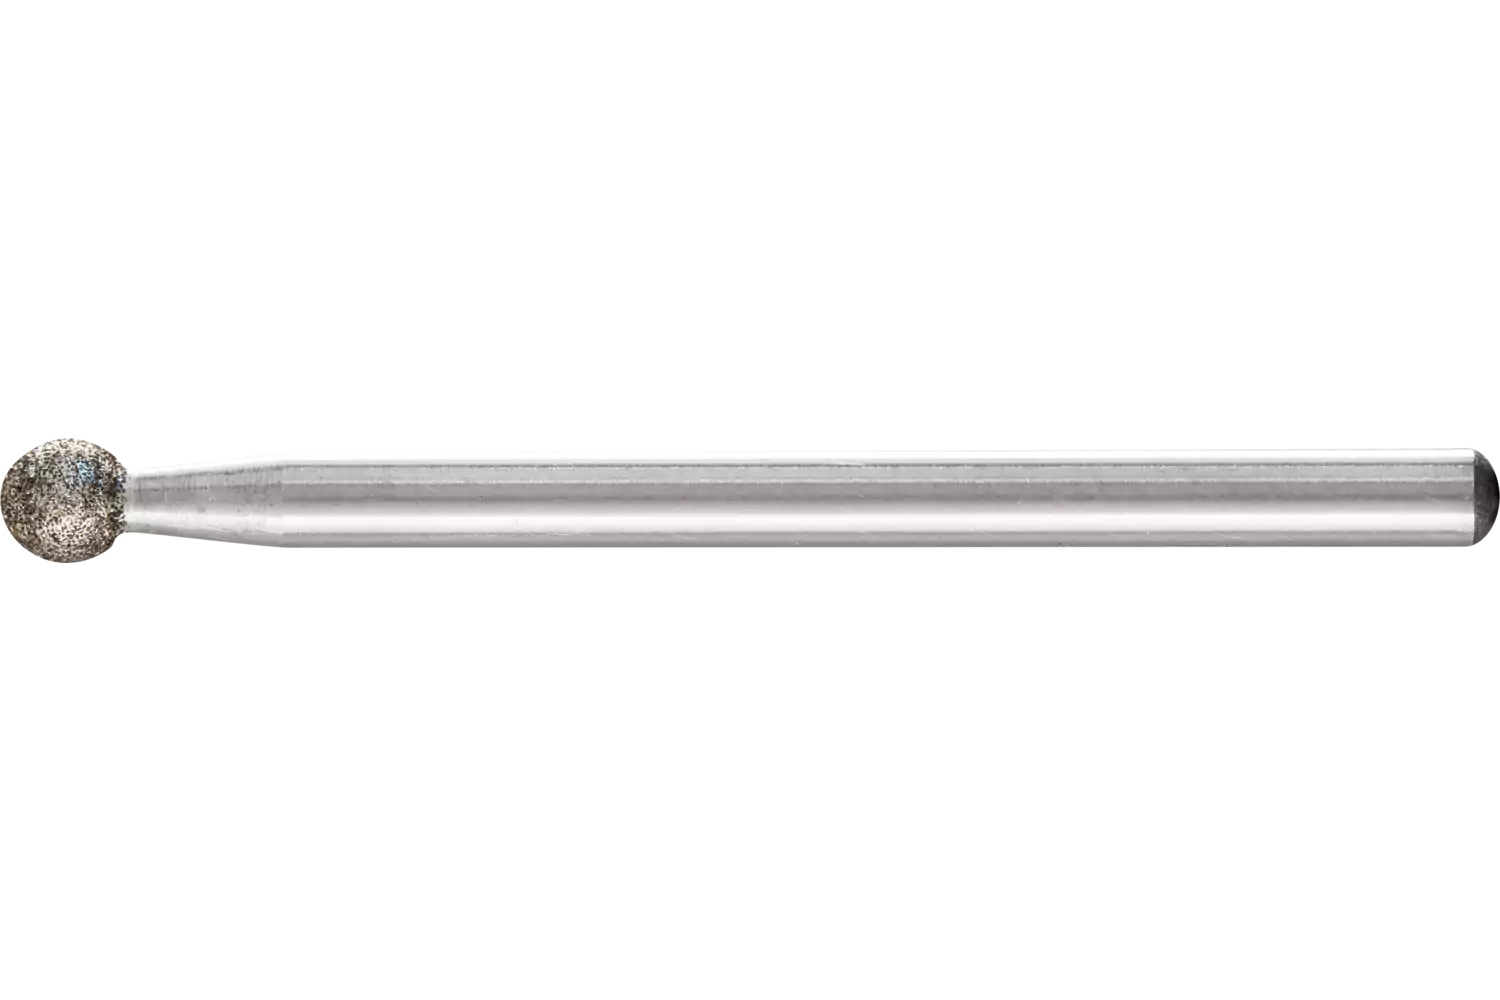 Mola abrasiva in CBN sfera Ø 4,0 mm gambo Ø 3 mm B126 (media) per incisione e sbavatura 1